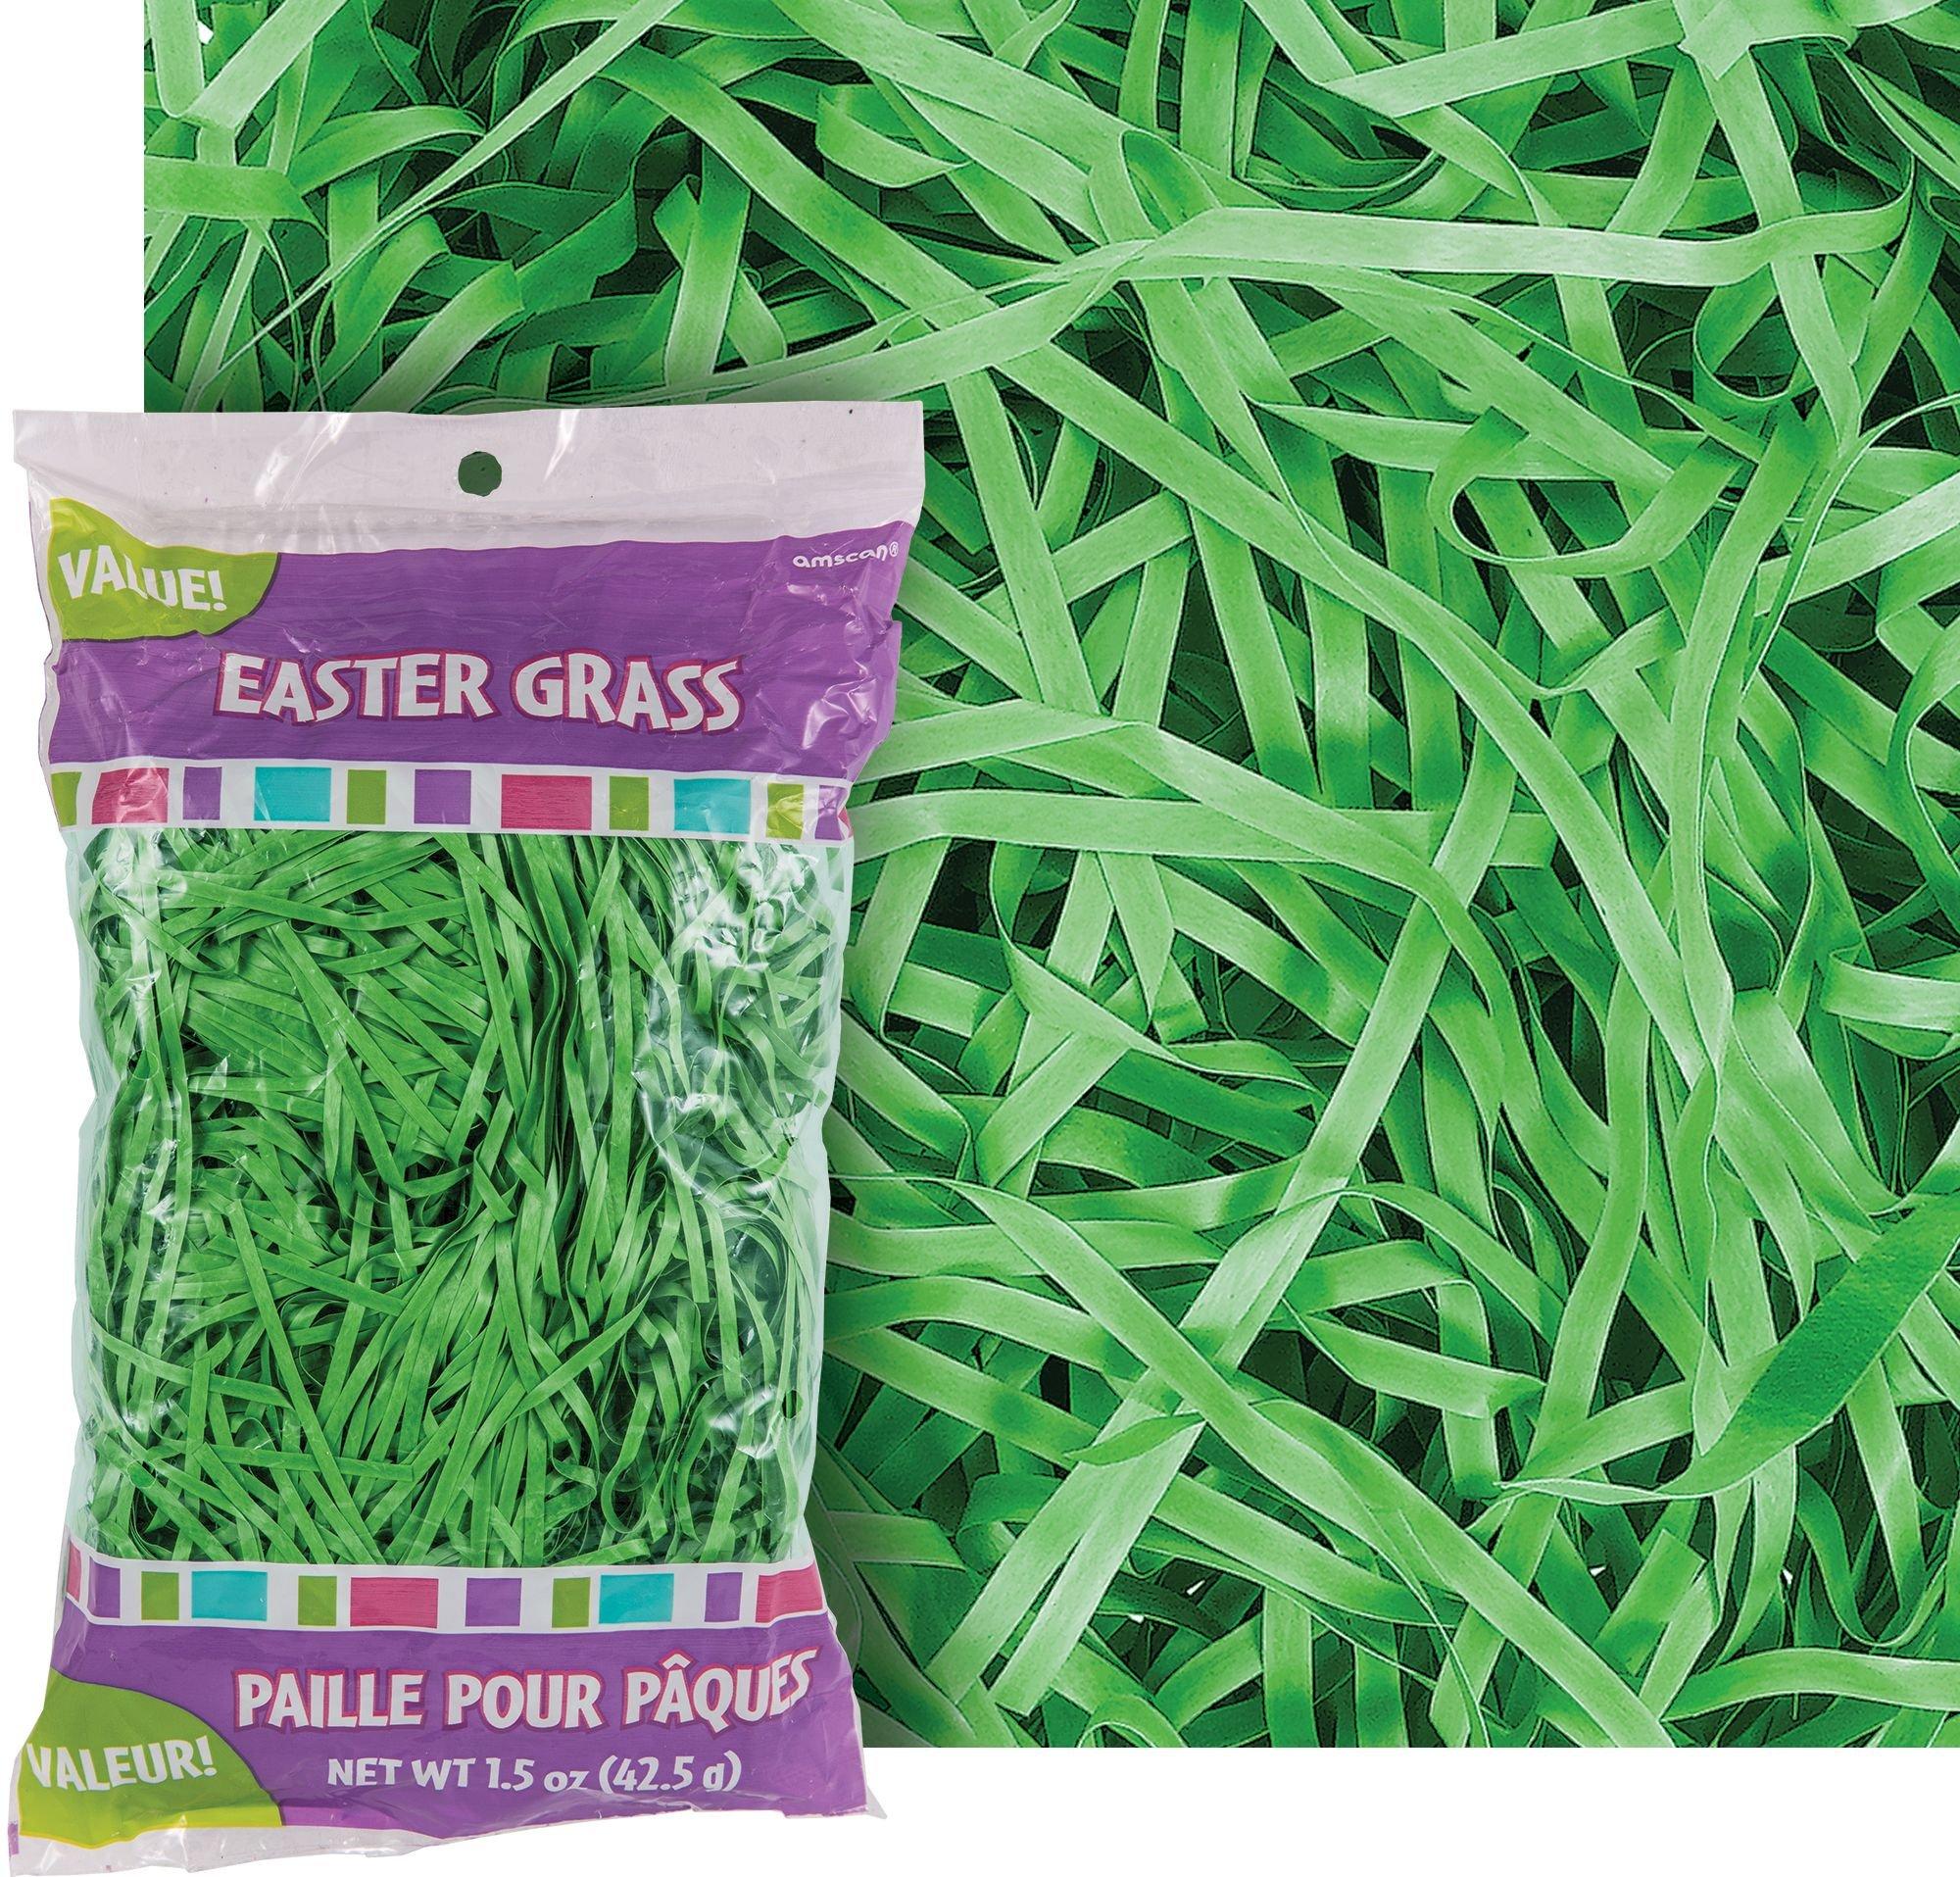 Easter Basket Grass 3x3 oz Bag (Green, Yellow, Pink)